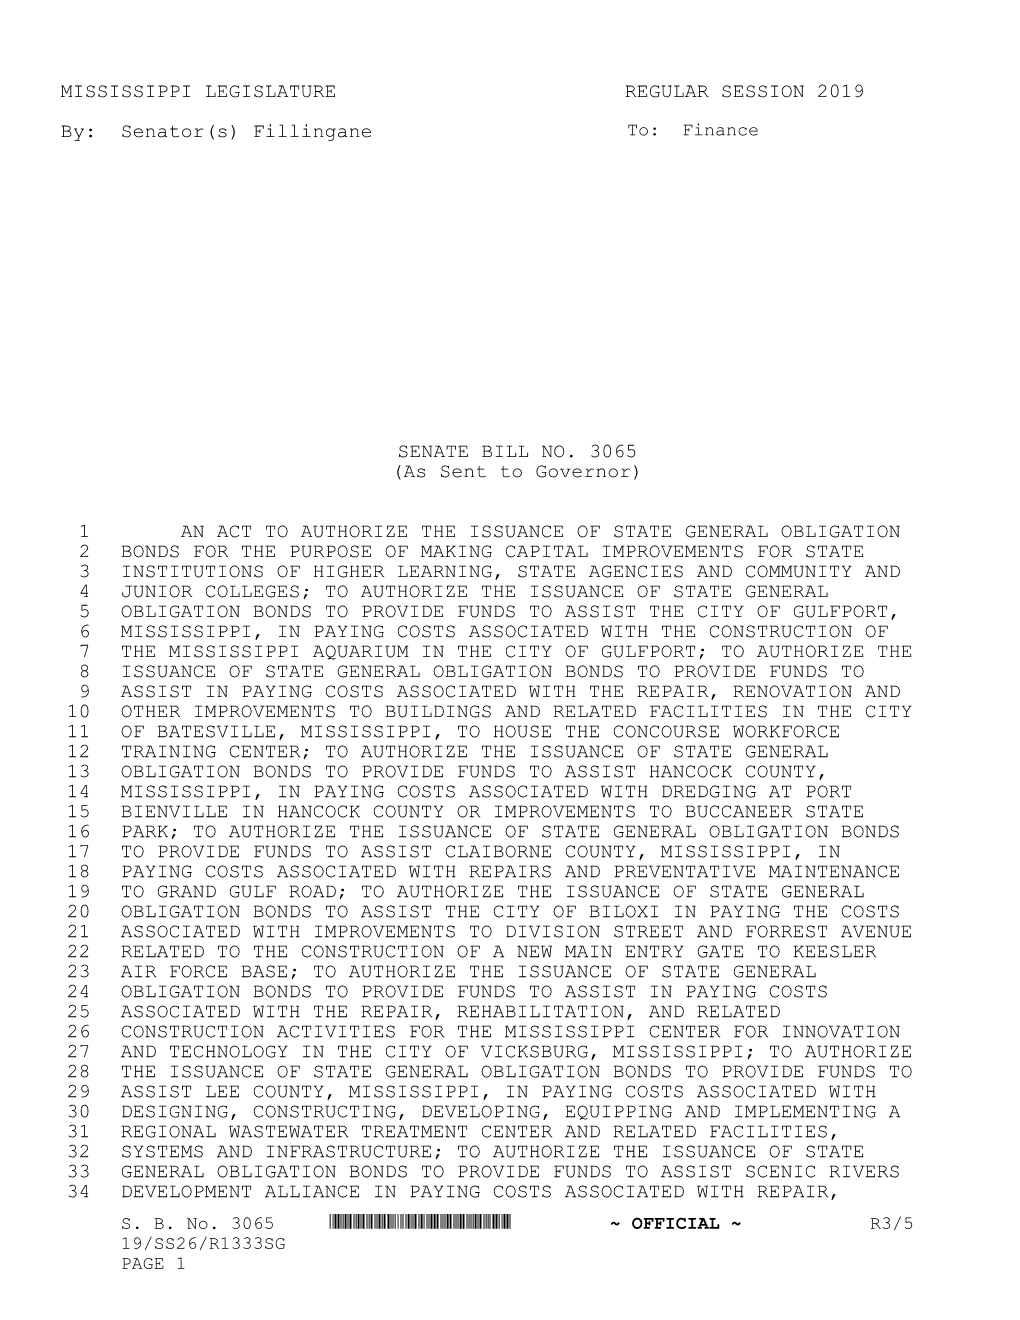 Senate Bill 3065